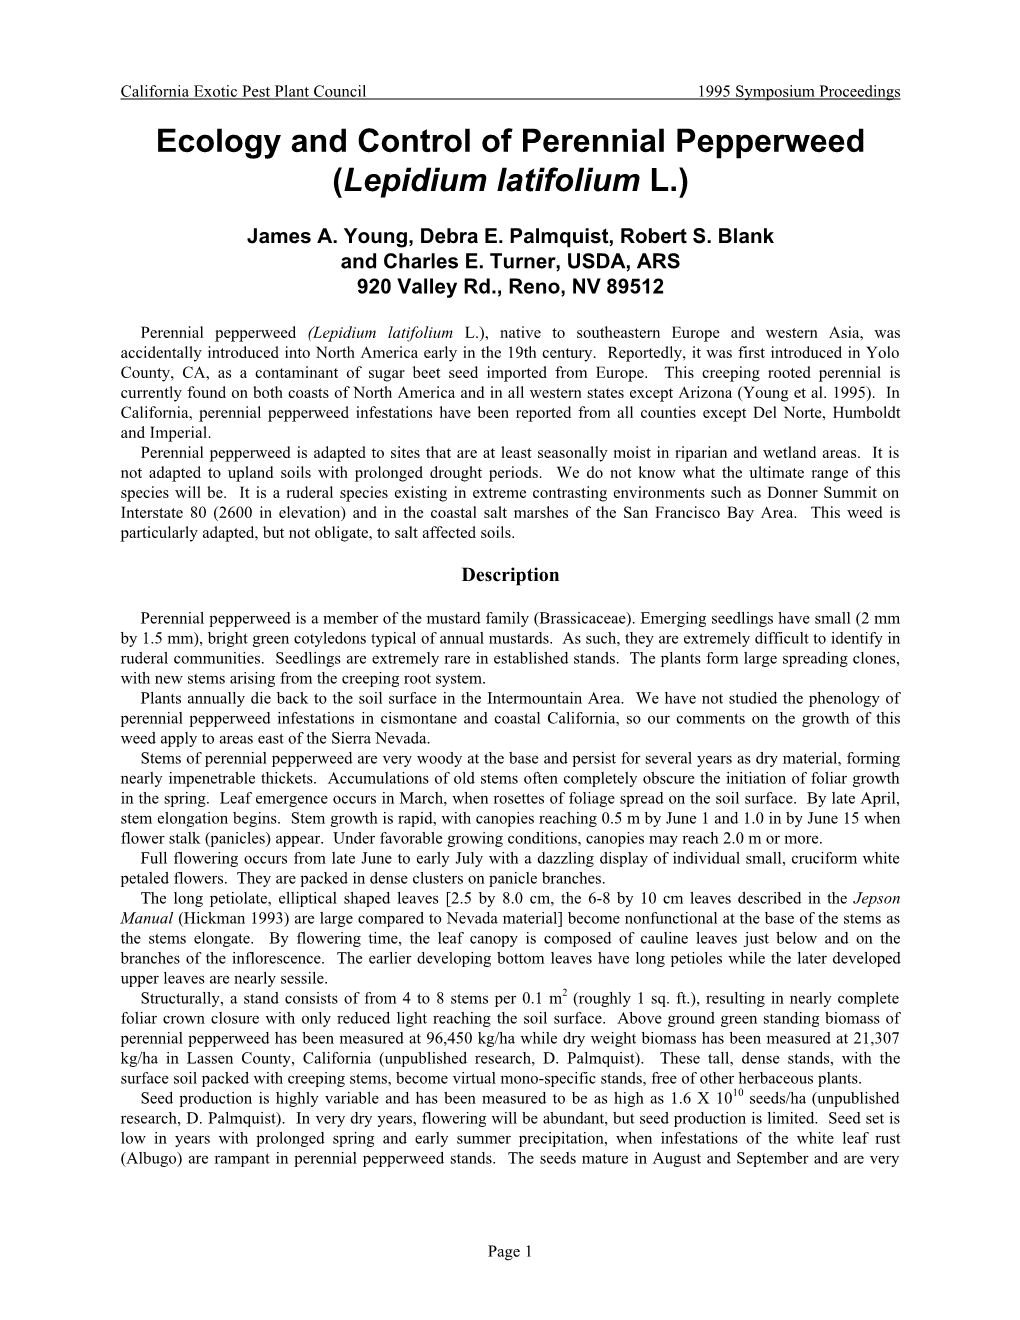 Ecology and Control of Perennial Pepperweed (Lepidium Latifolium L.)